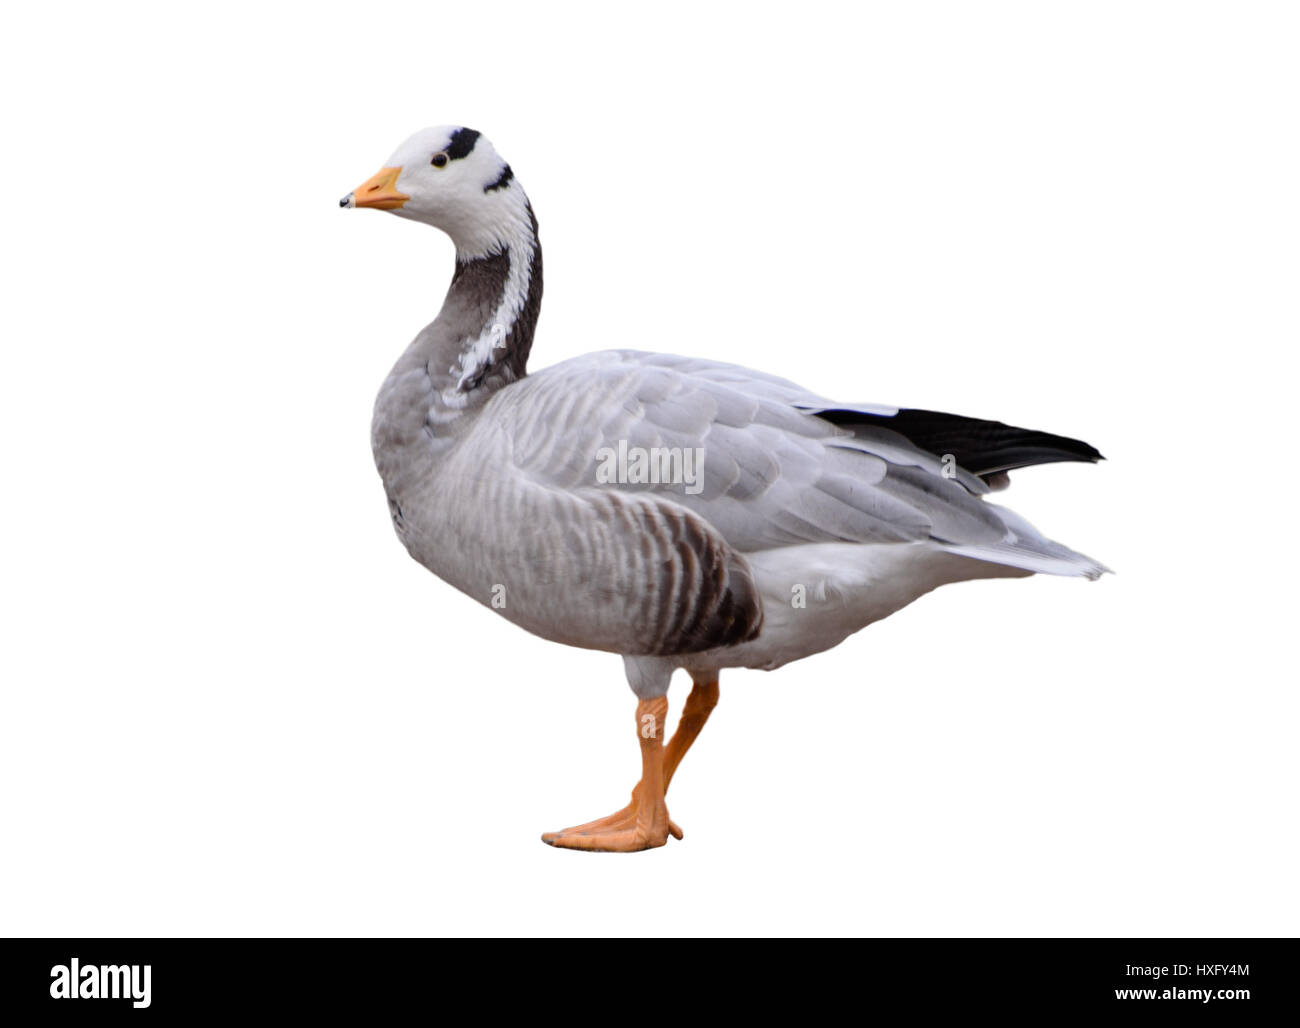 Bar-headed goose, Anser indicus, single bird isolated on white background Stock Photo